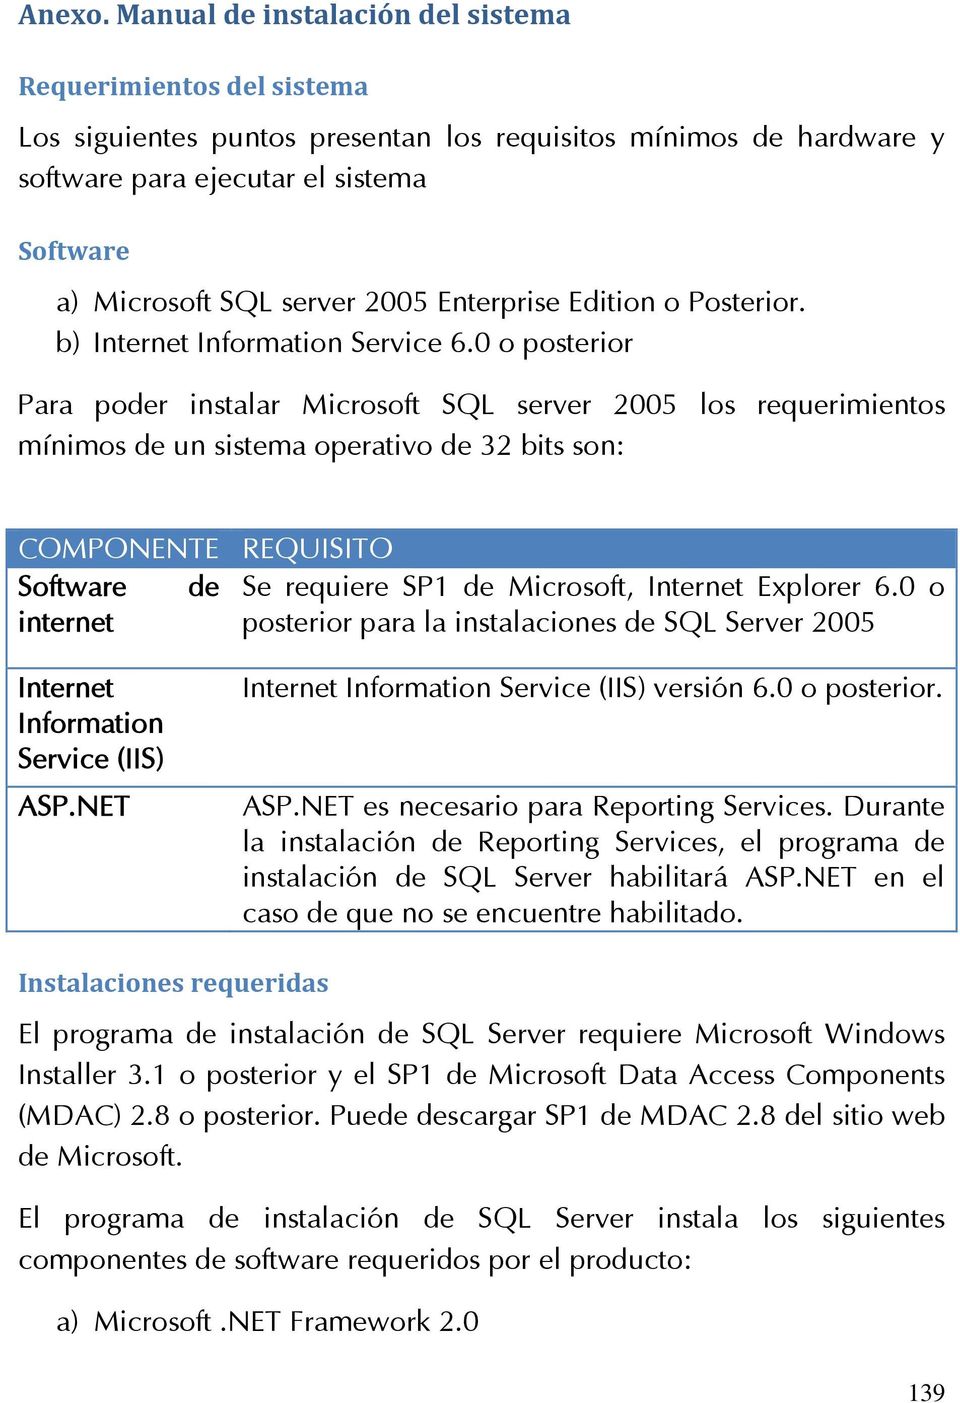 2005 Enterprise Edition o Posterior. b) Internet Information Service 6.